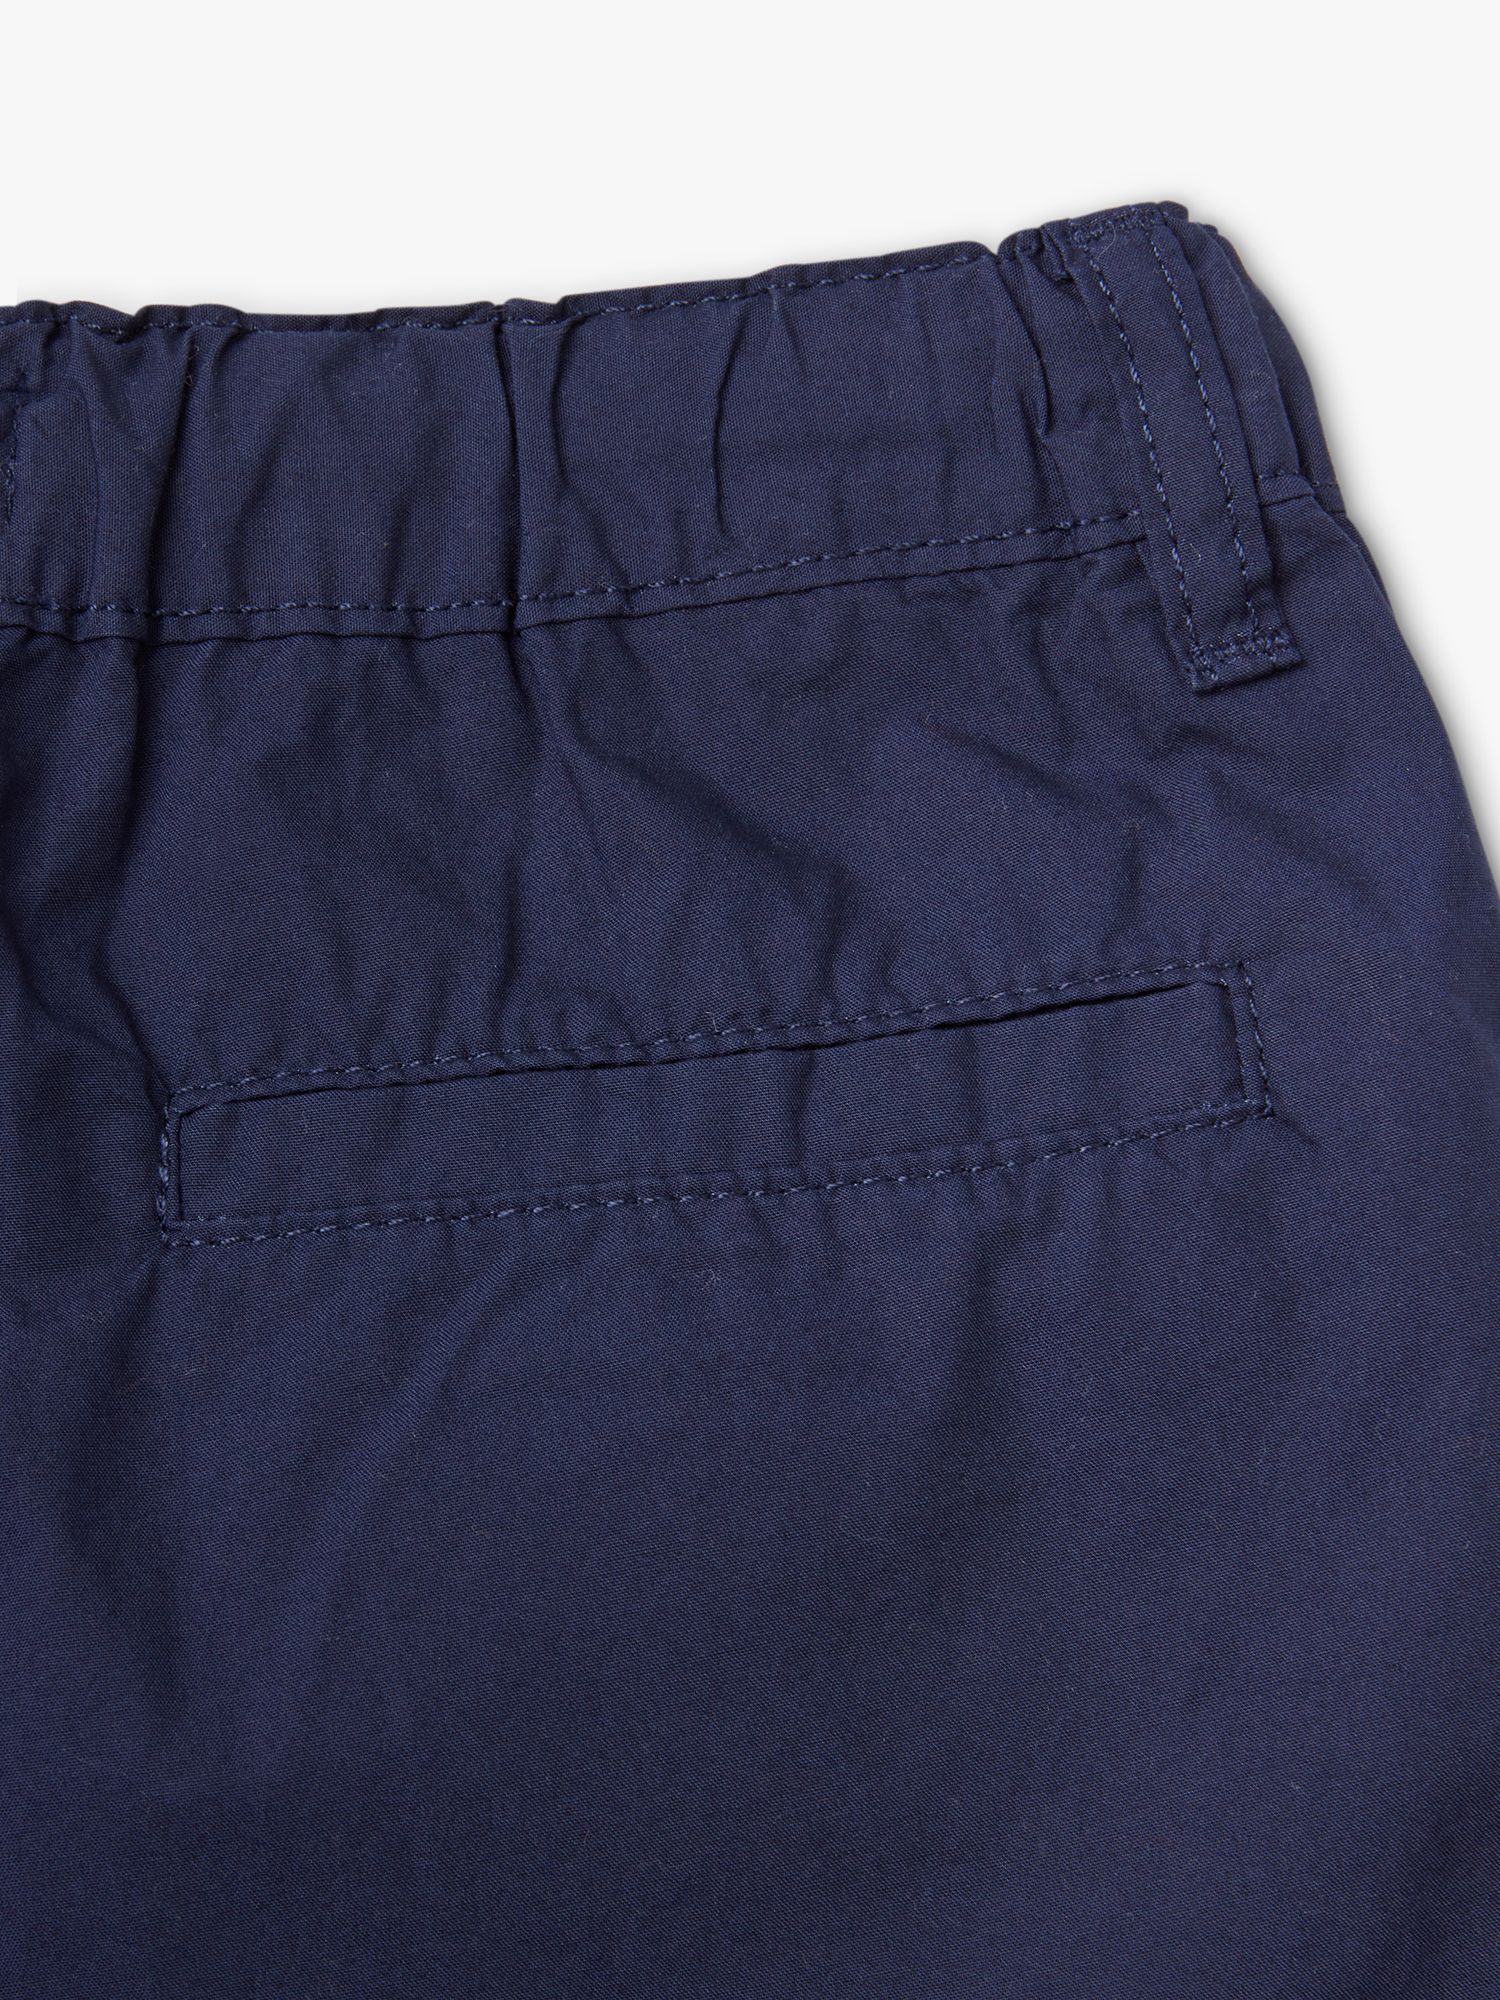 Benetton Kids' Poplin Casual Shorts, Night Blue, 3-4 years